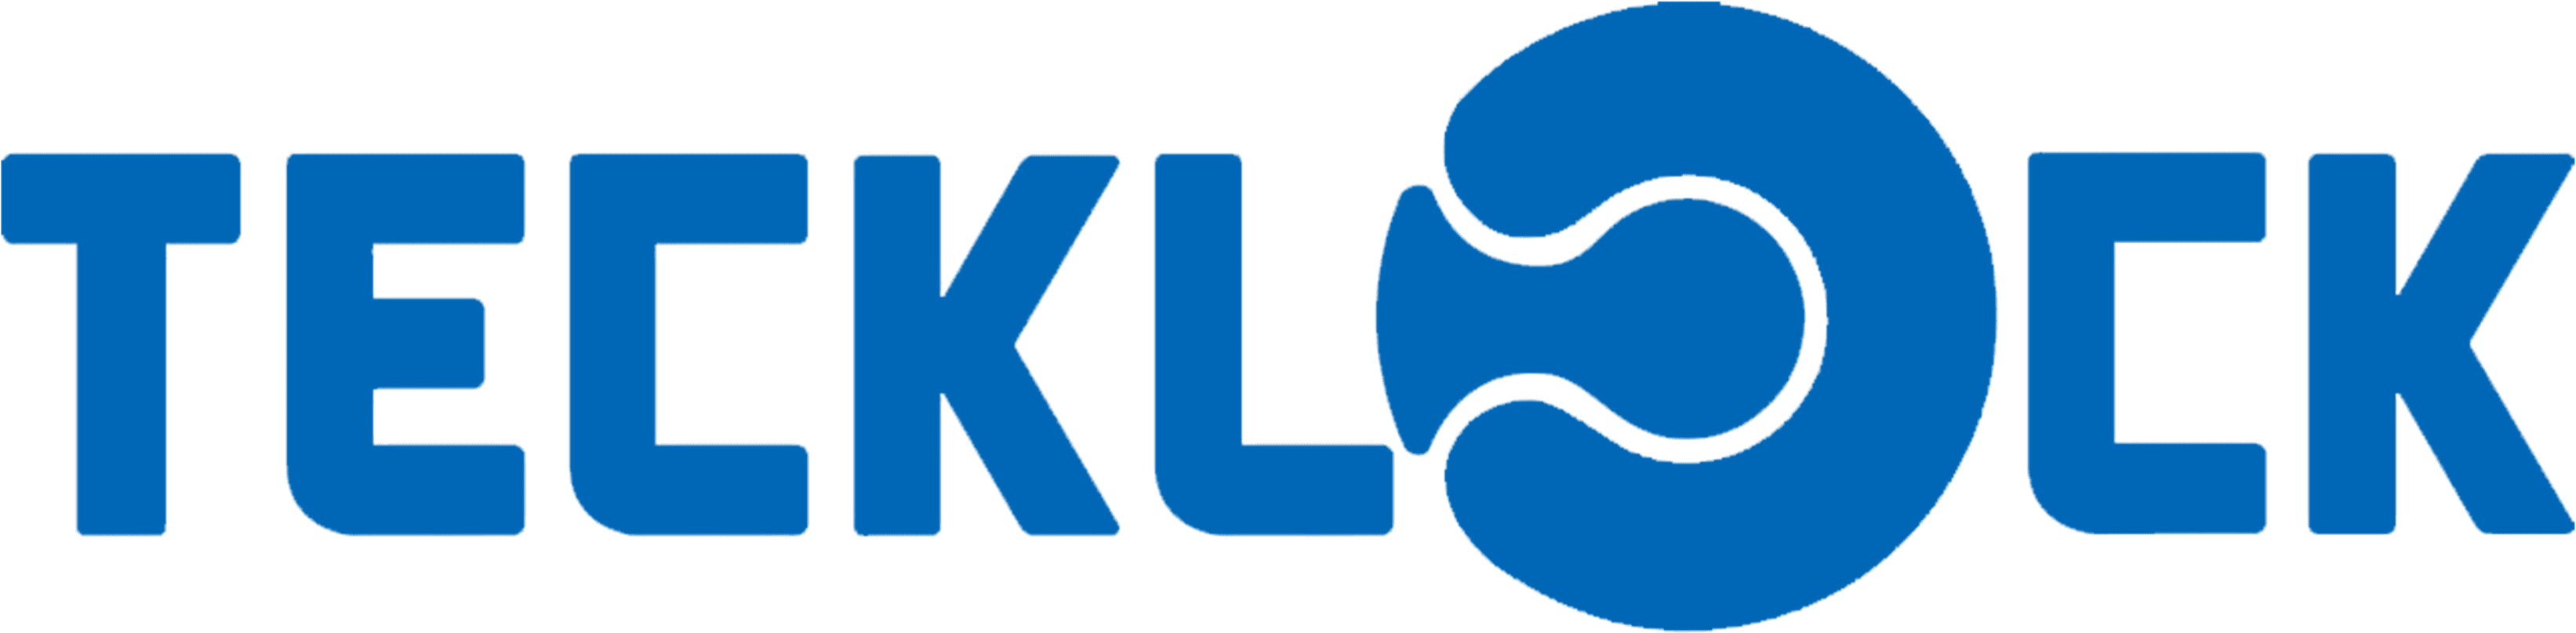 logo-tecklock